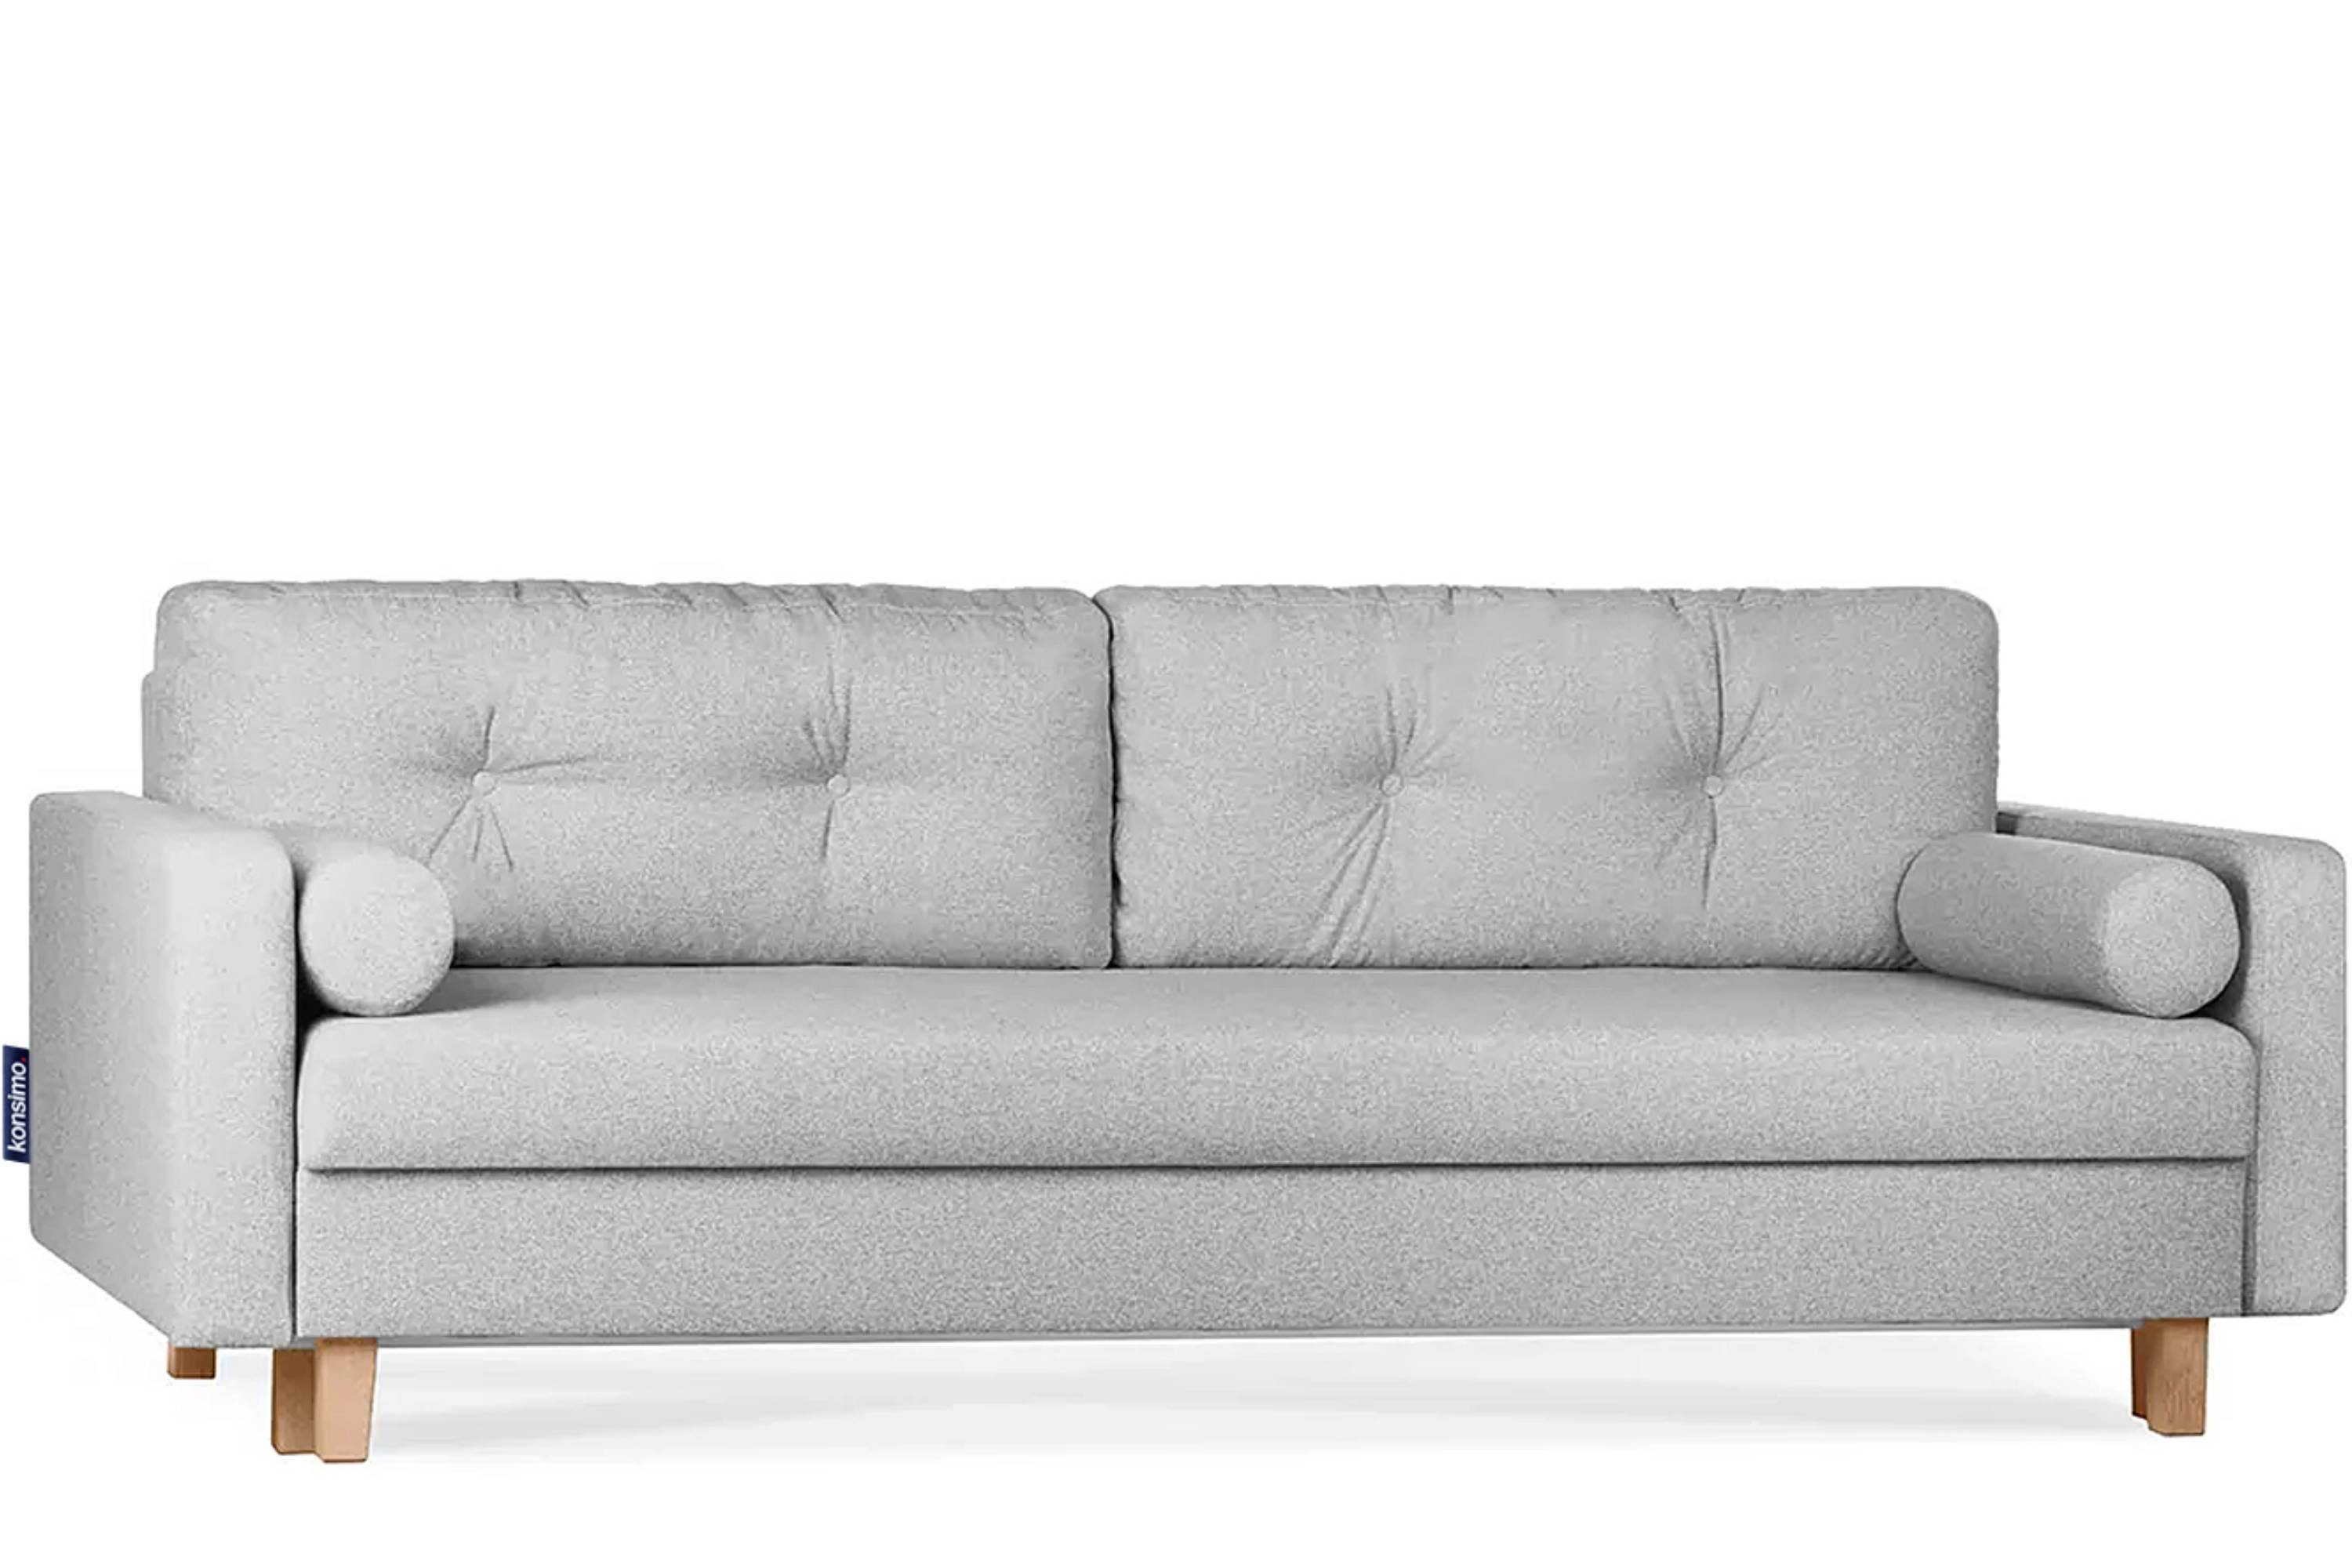 Konsimo Schlafsofa ERISO 3-Personen, ausziehbare Sofa 196x150 Liegfläche cm